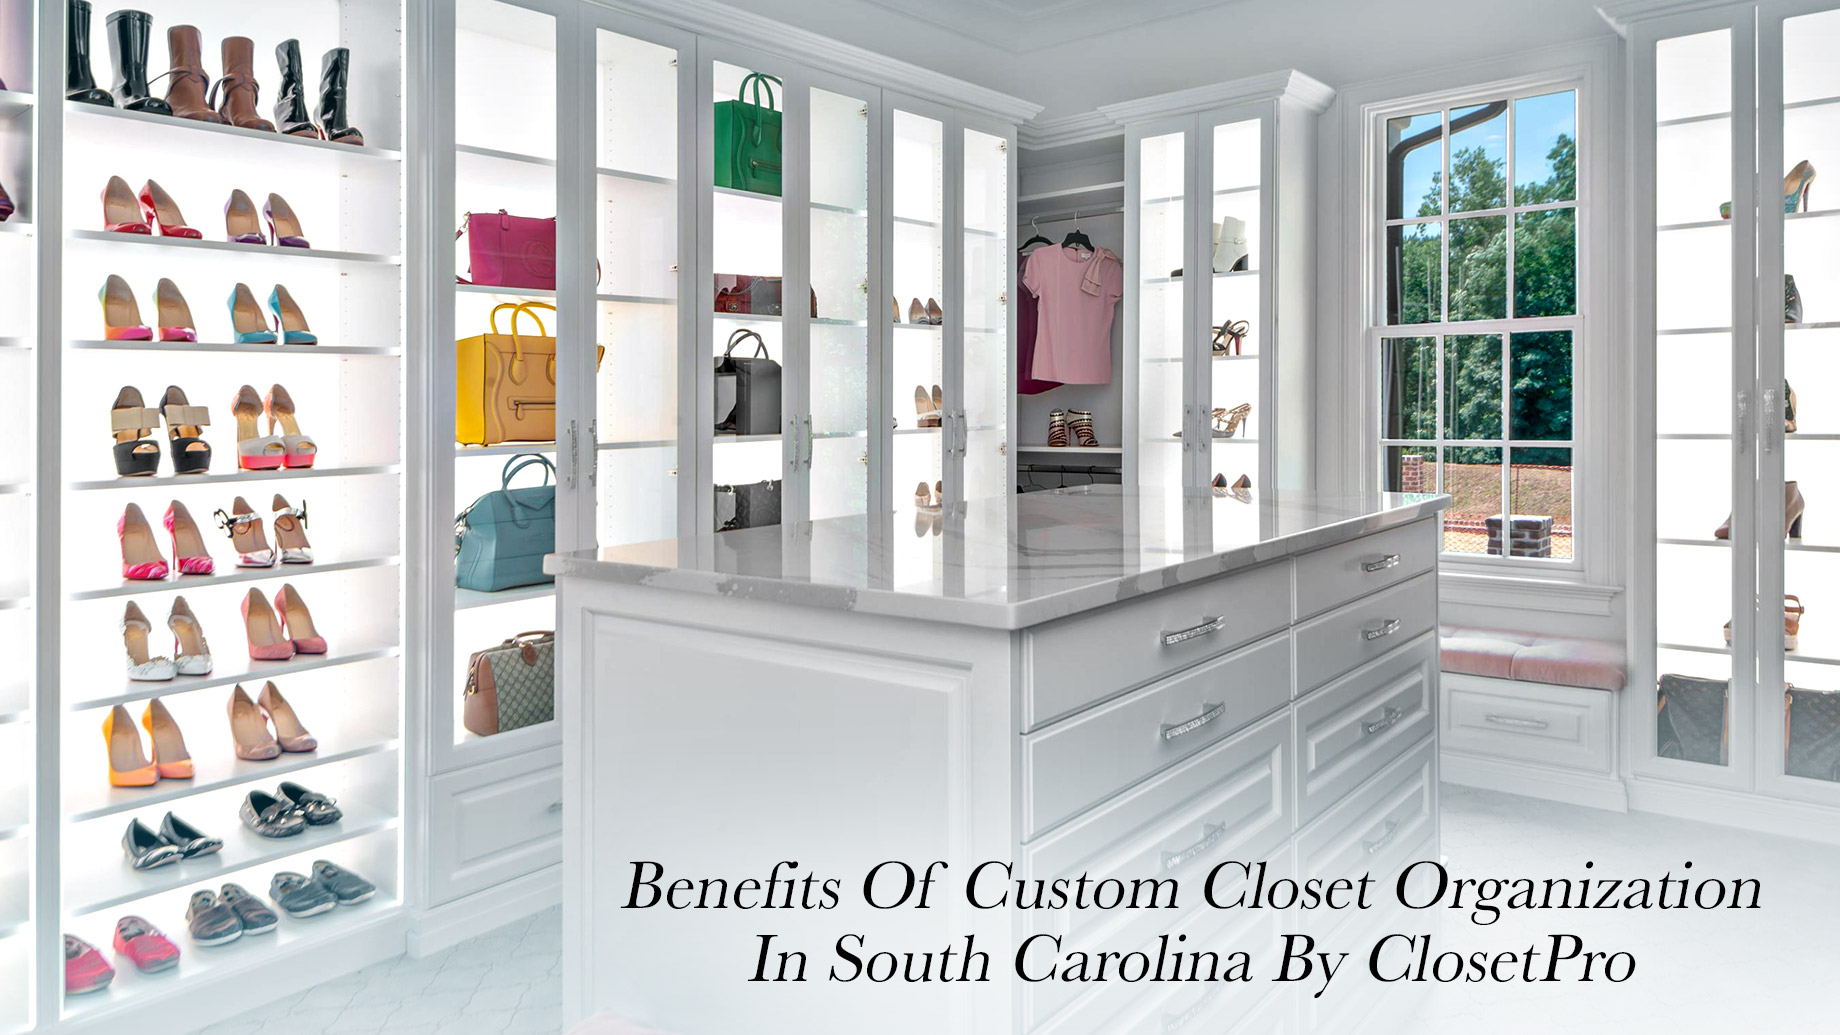 Benefits Of Custom Closet Organization In South Carolina By ClosetPro